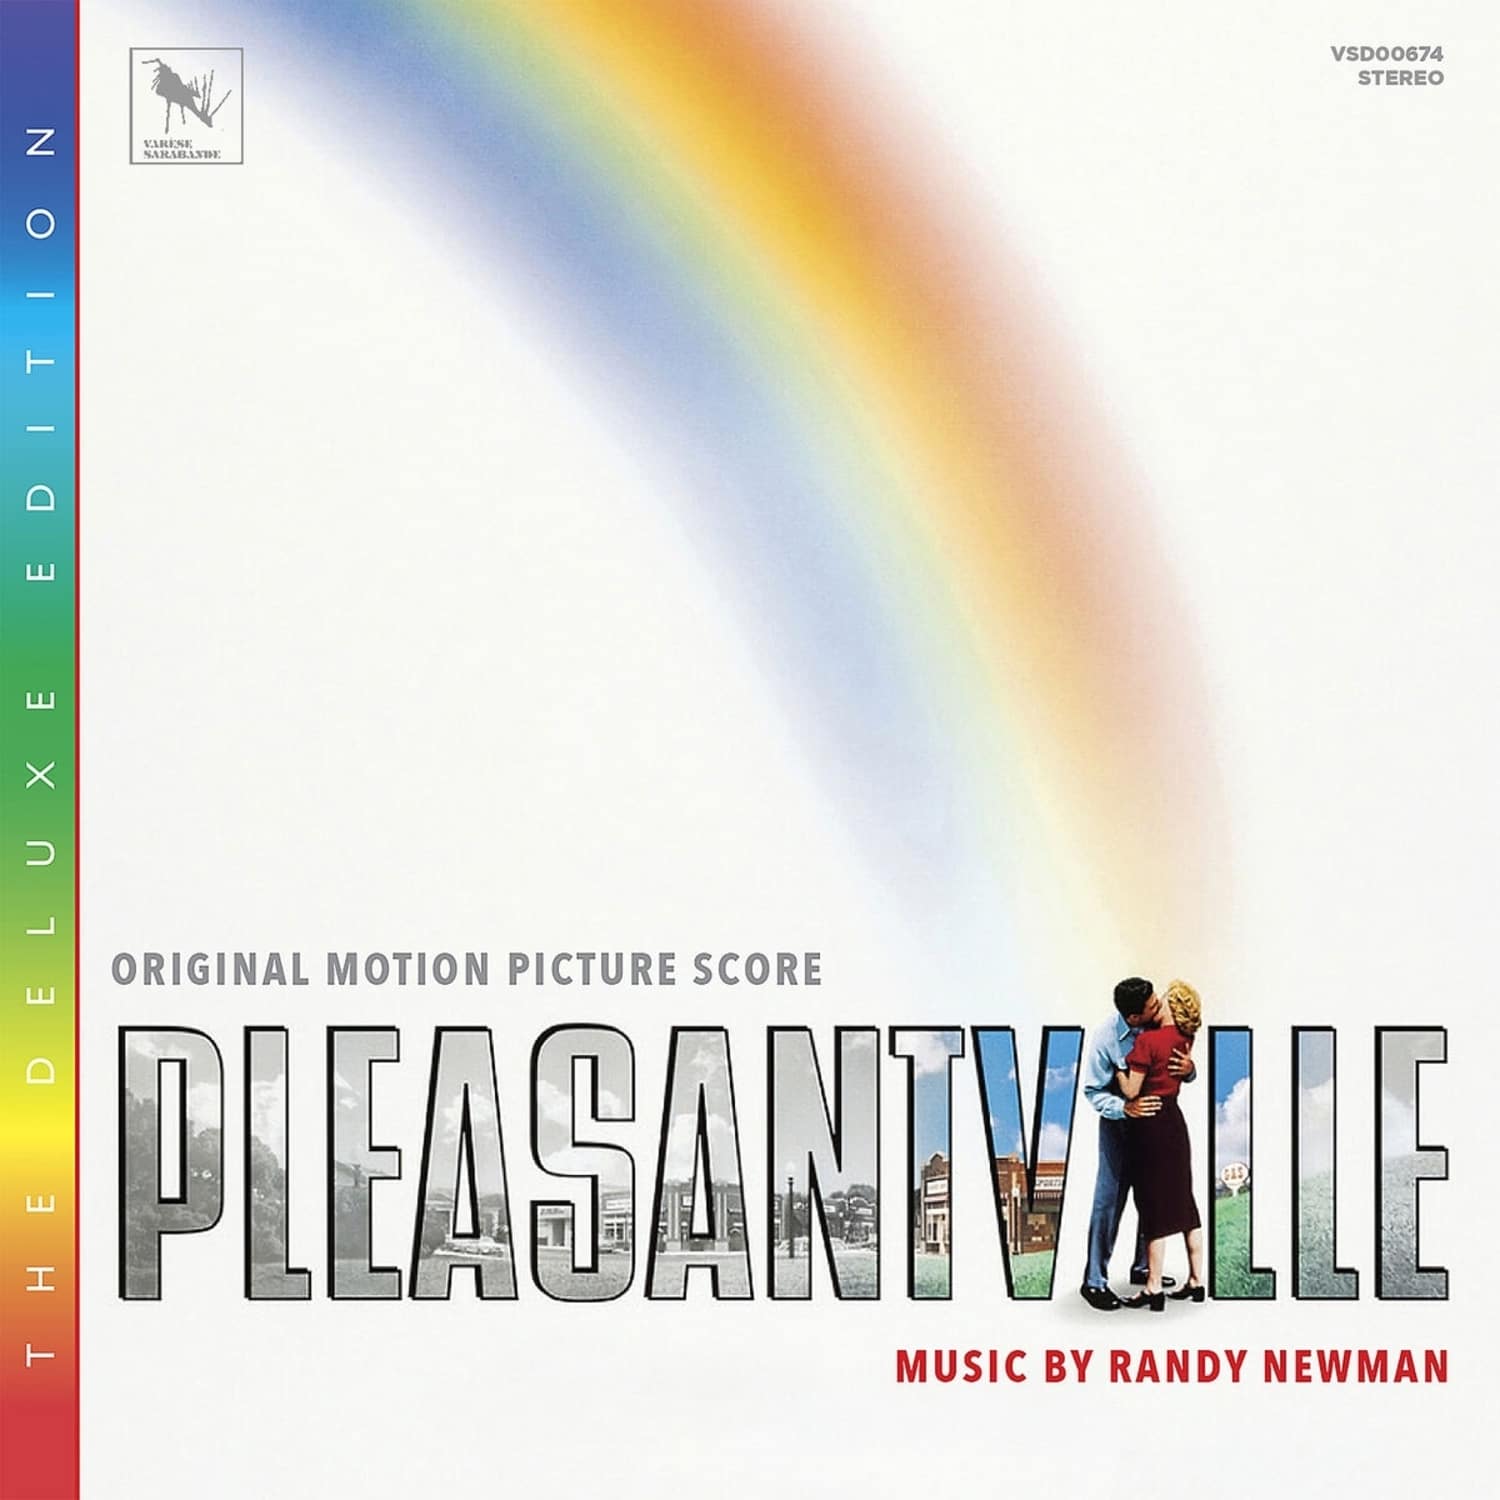 OST / Randy Newman - PLEASANTVILLE 